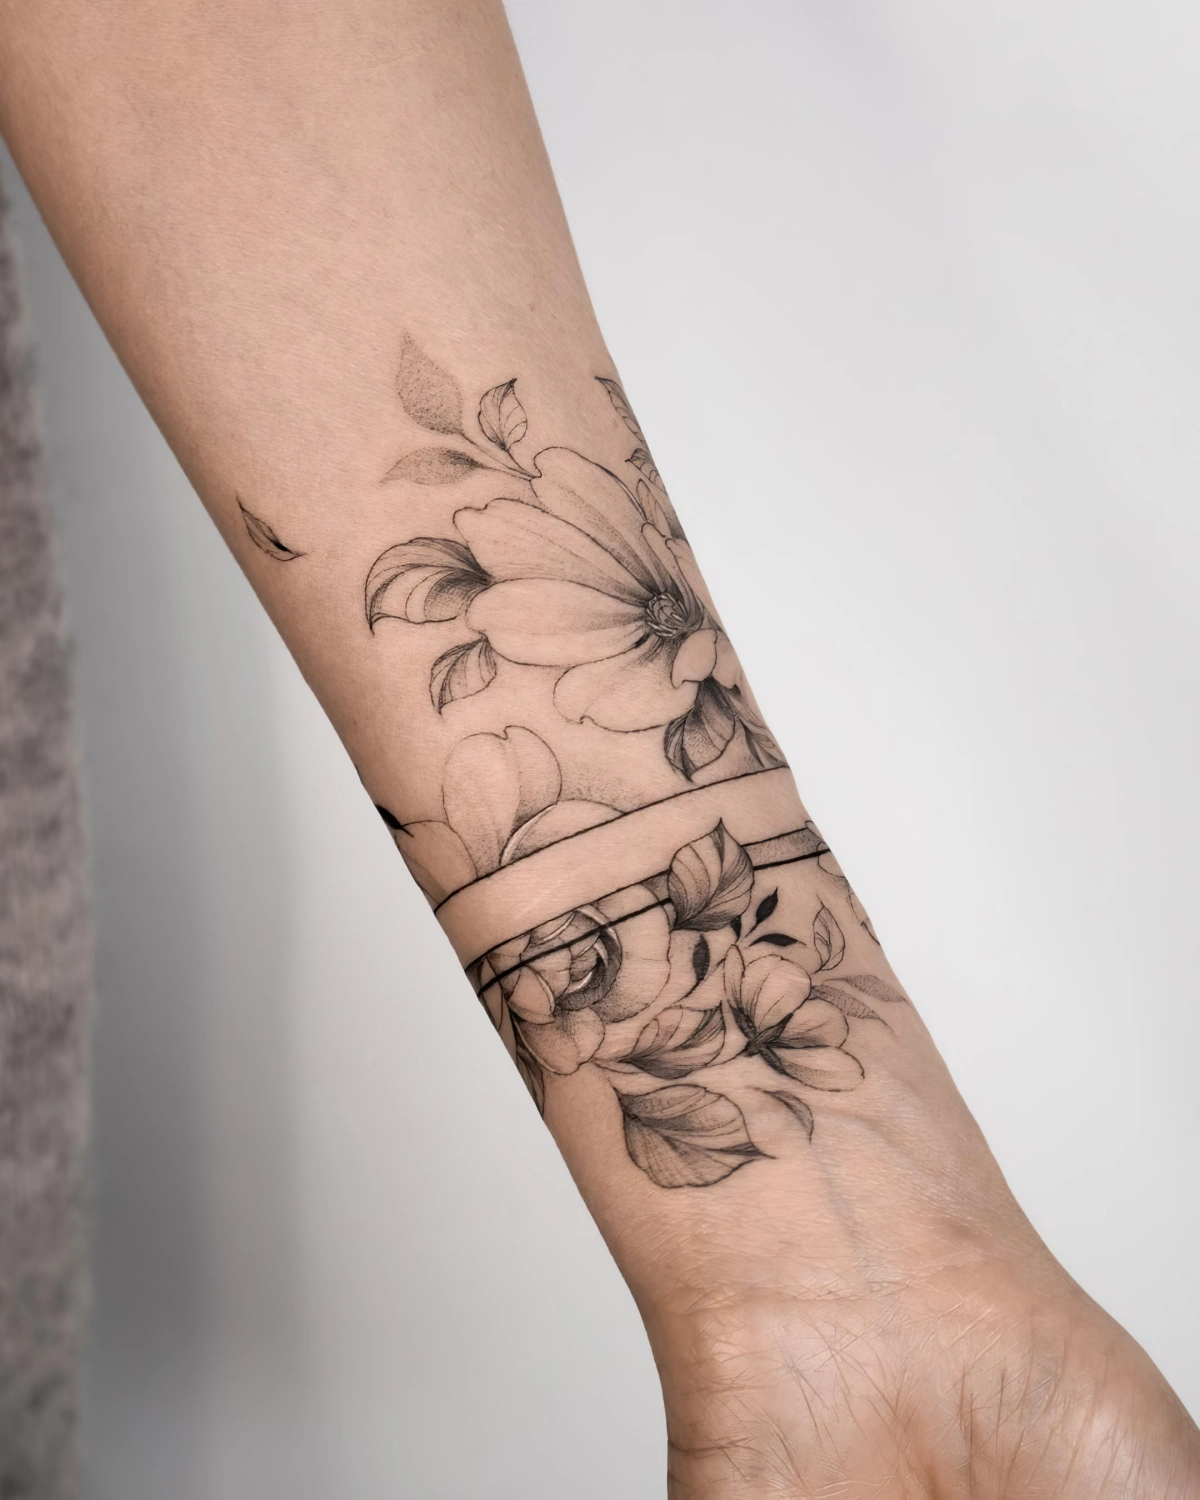 tatouage manchette femme discret motifs fleurs bijou peau dessin